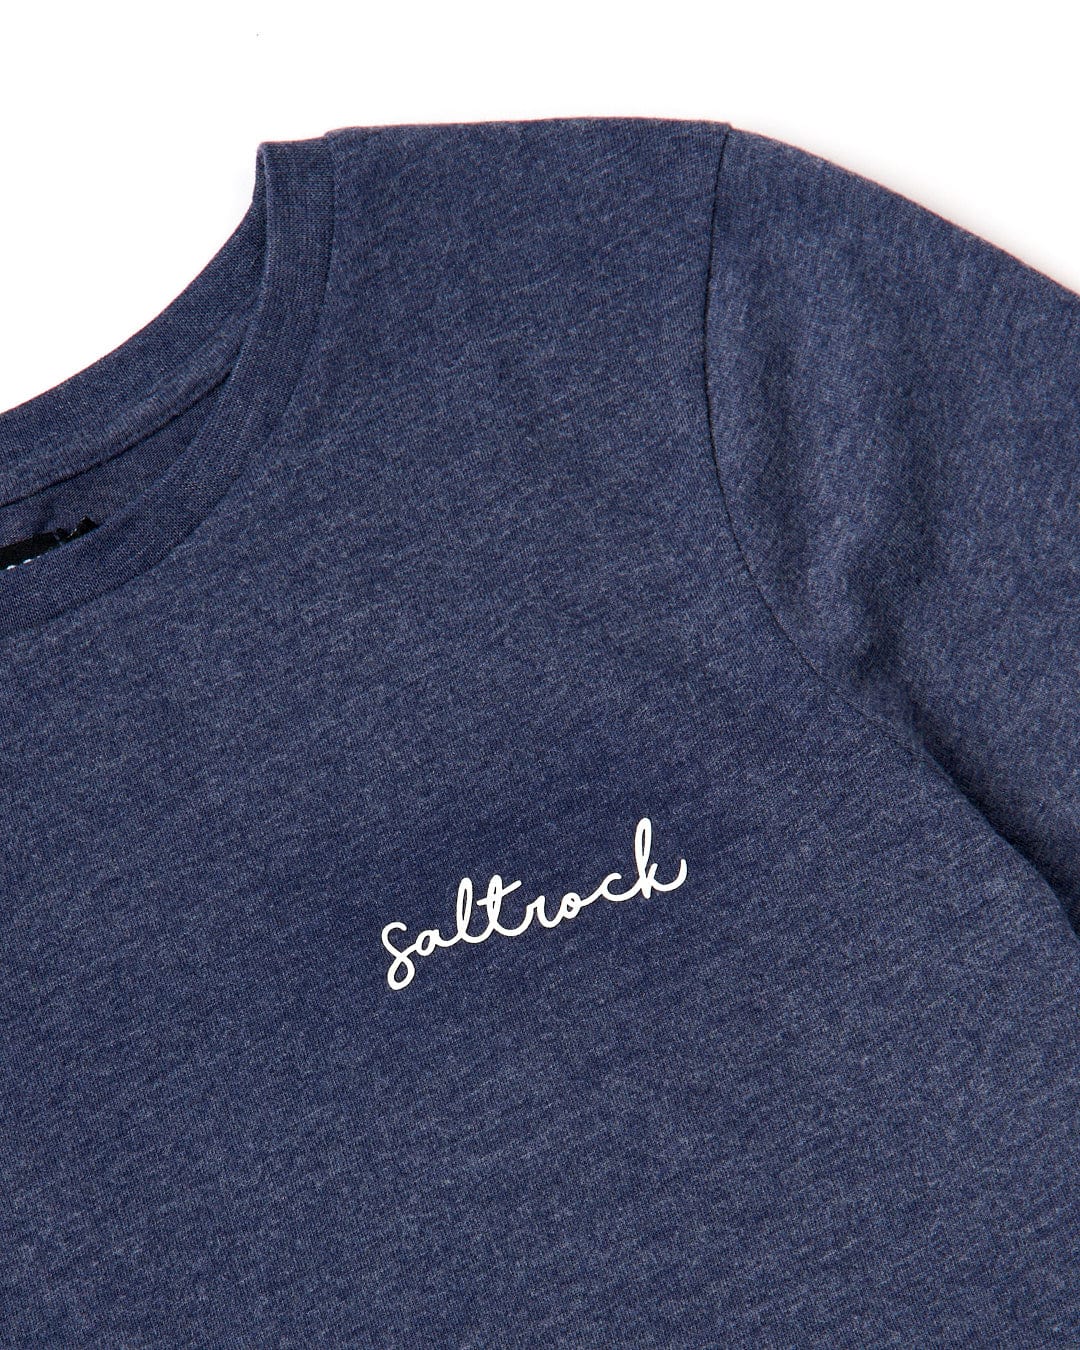 A Velator - Womens Short Sleeve T-Shirt - Blue Marl with Saltrock branding on the chest.